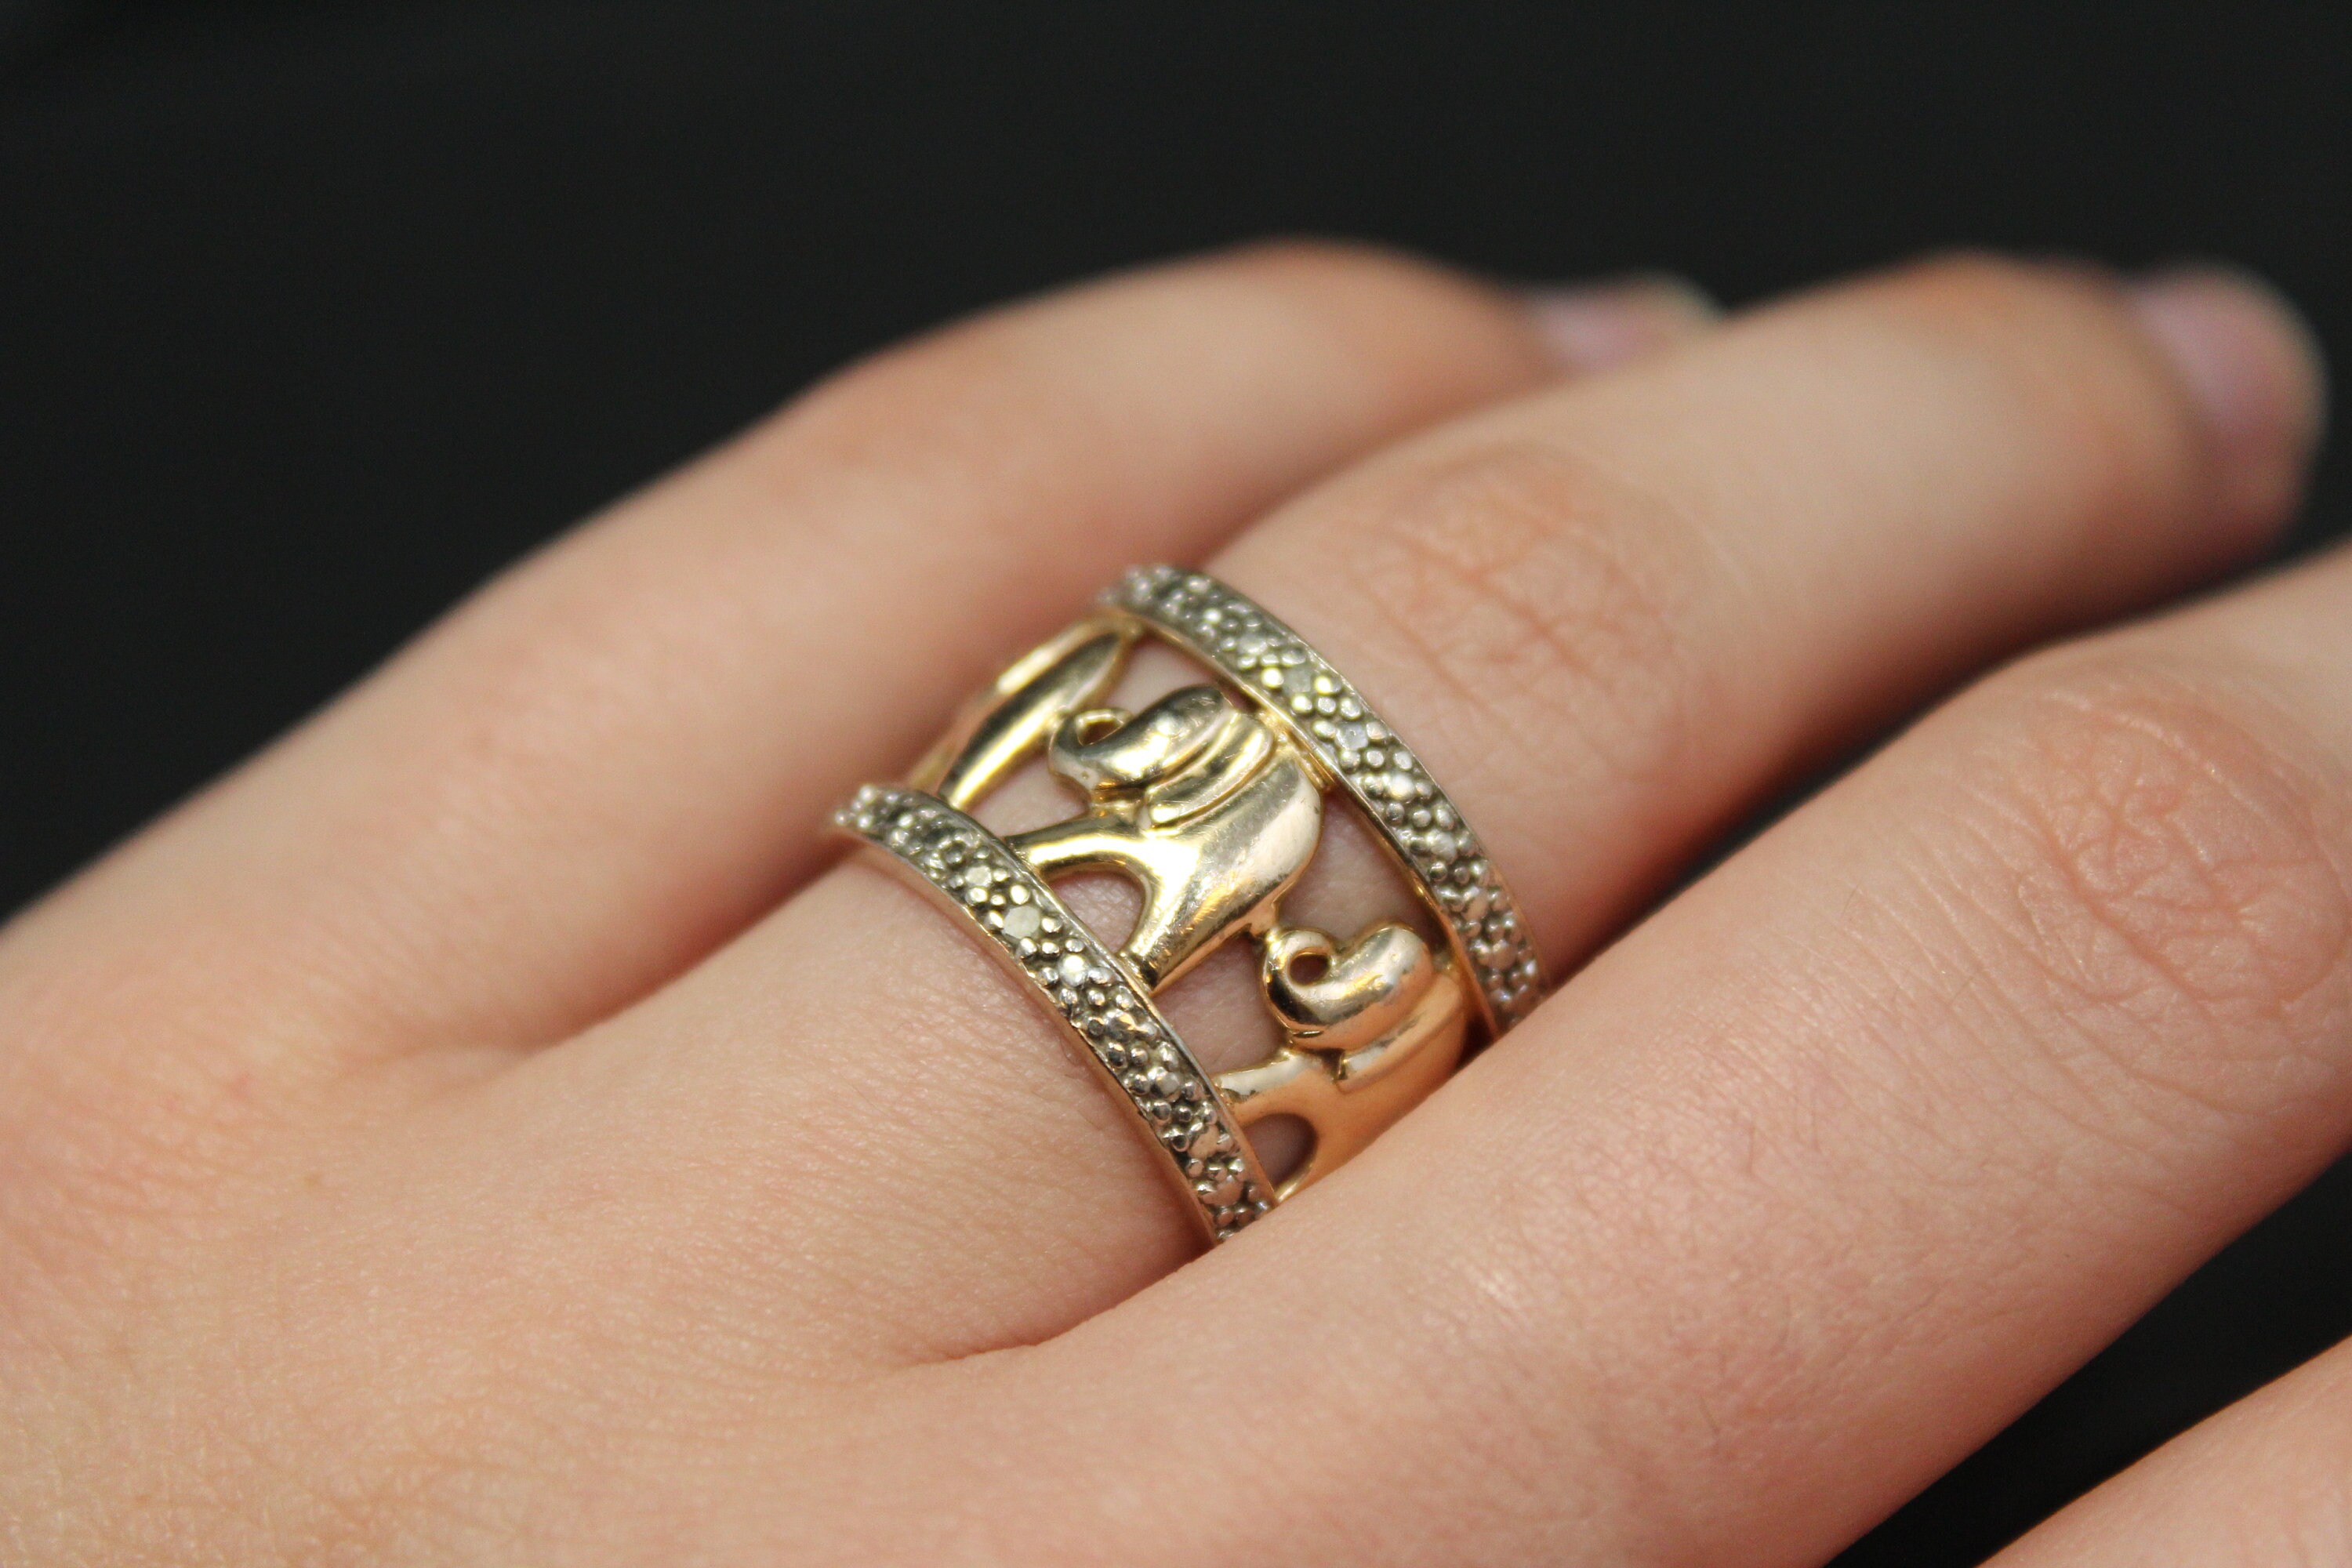 Vintage Sterling Silver and Amber Elephant Ring by sevvysgirl on DeviantArt